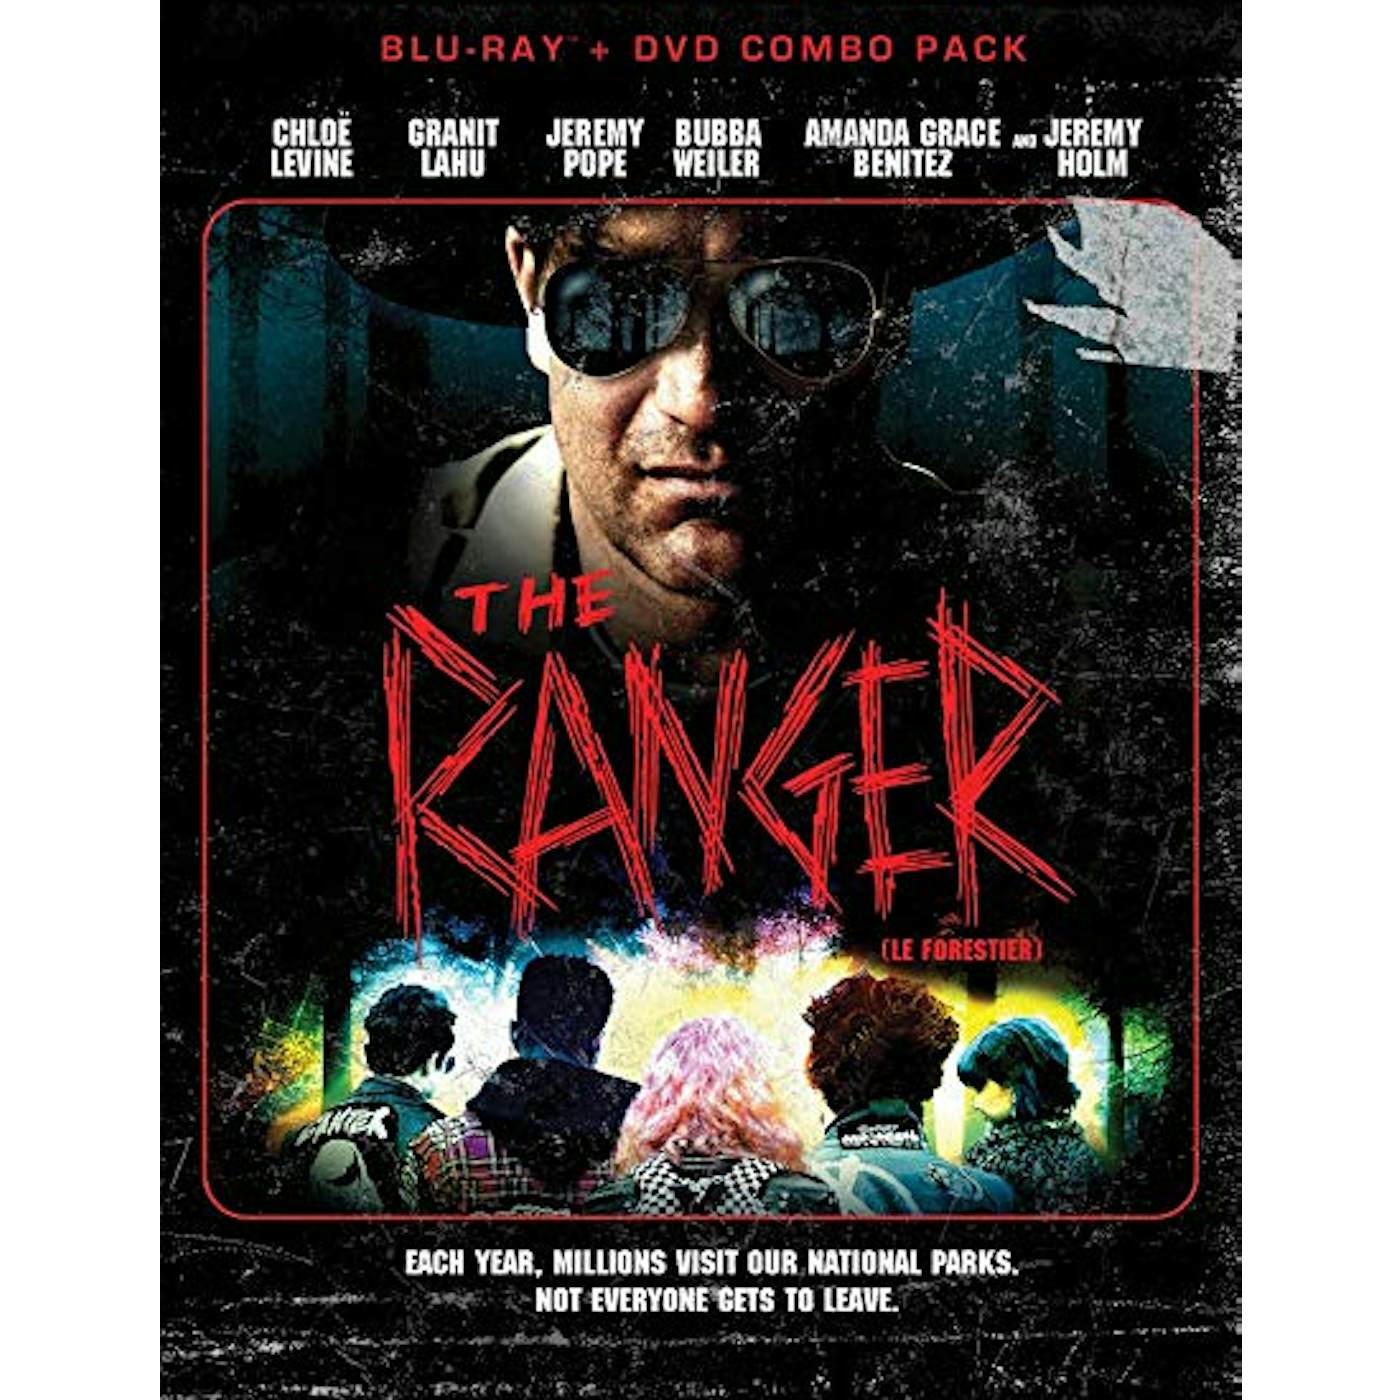 RANGER Blu-ray